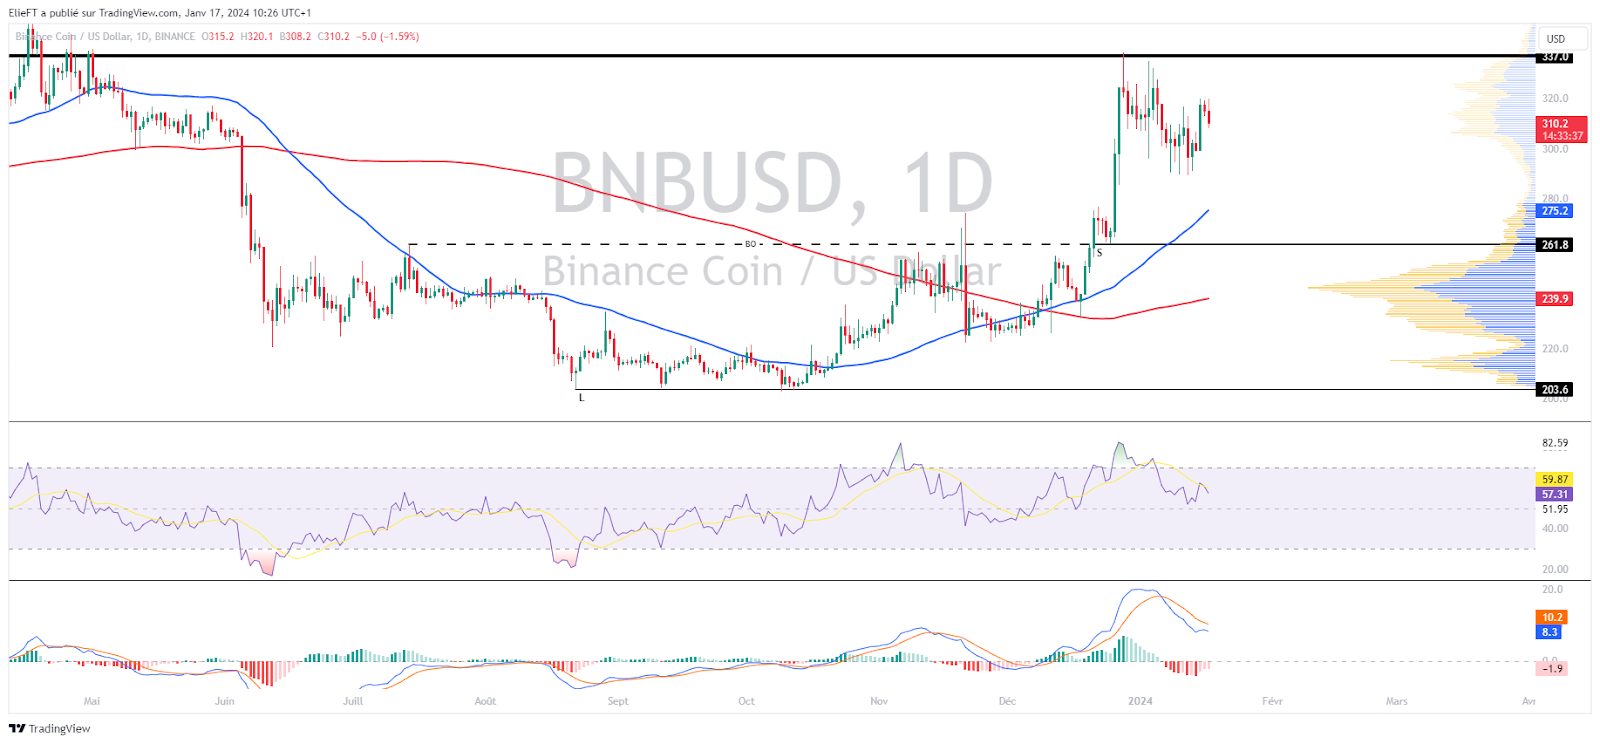 BNB/USD daily chart